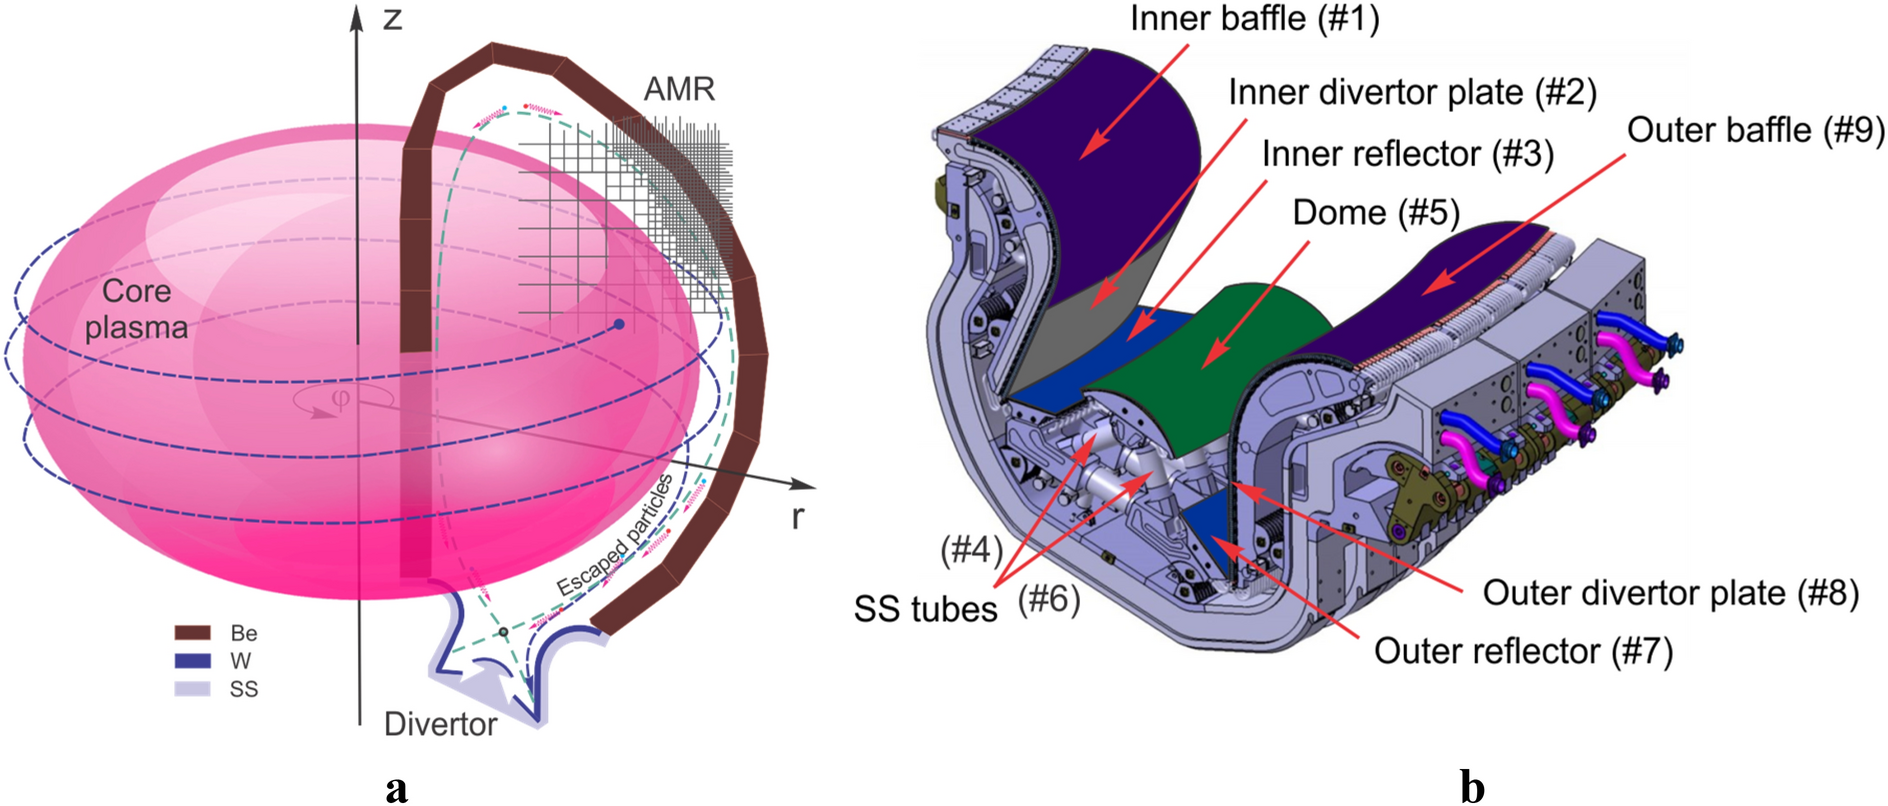 Potential design problems for ITER fusion device | Scientific Reports